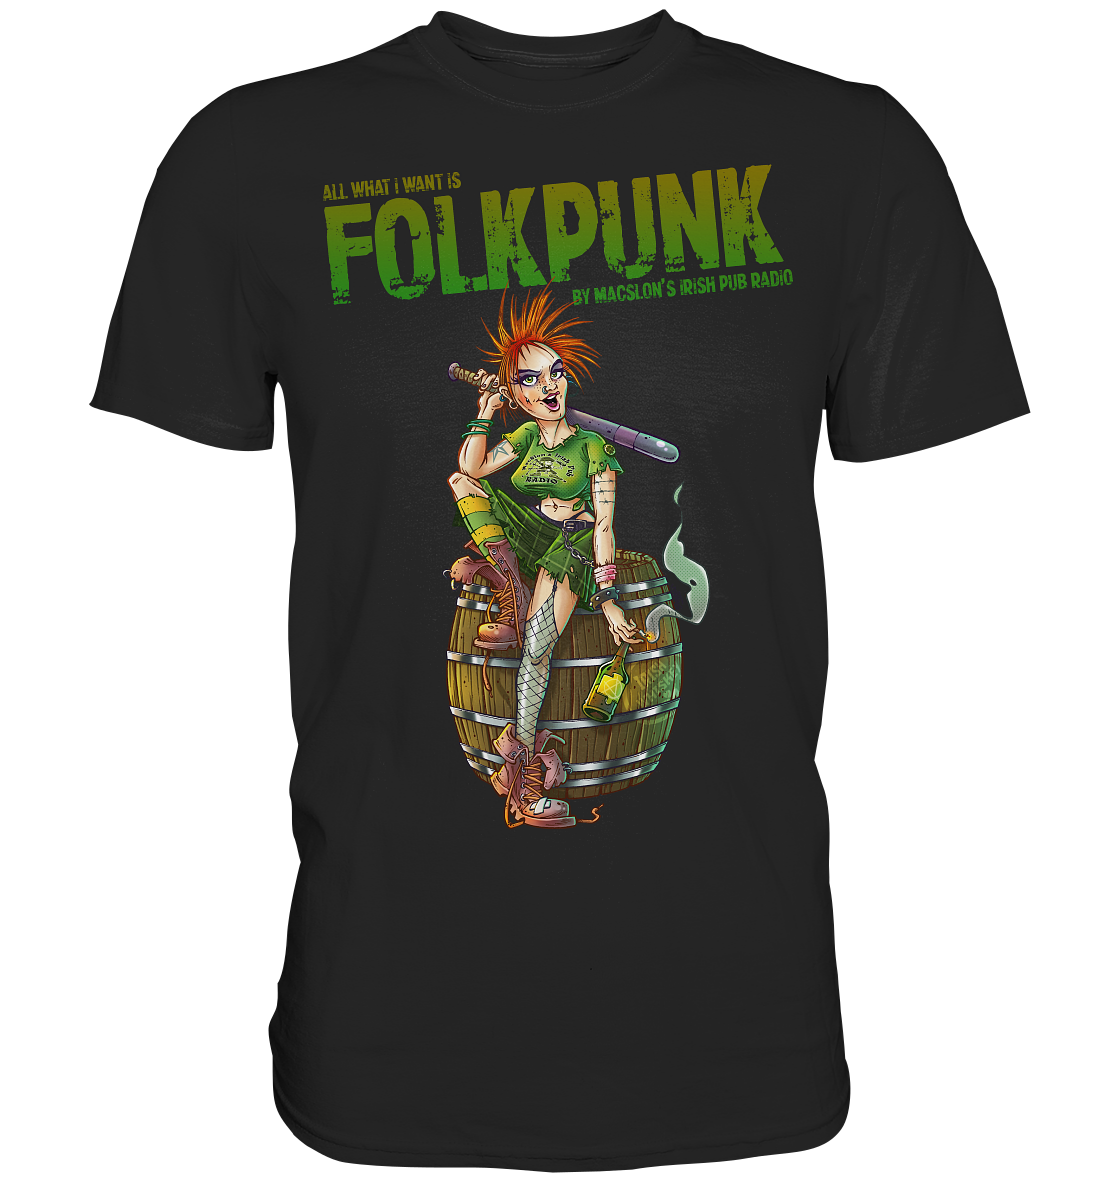 All What I Want Is "Folkpunk" - Premium Shirt